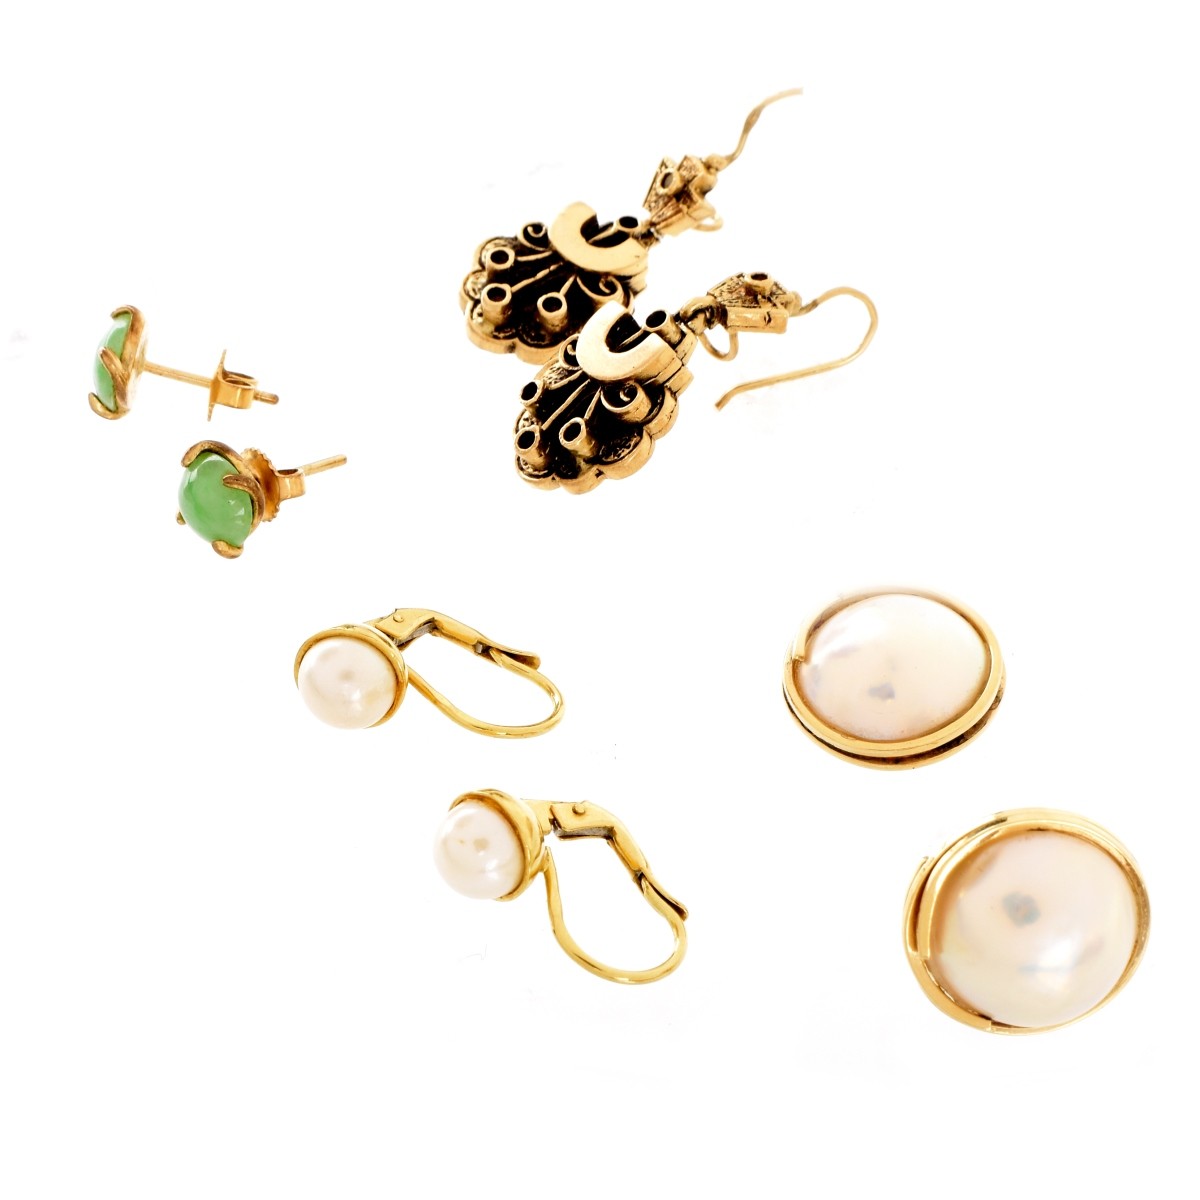 Four Pair of Vintage Gold Earrings